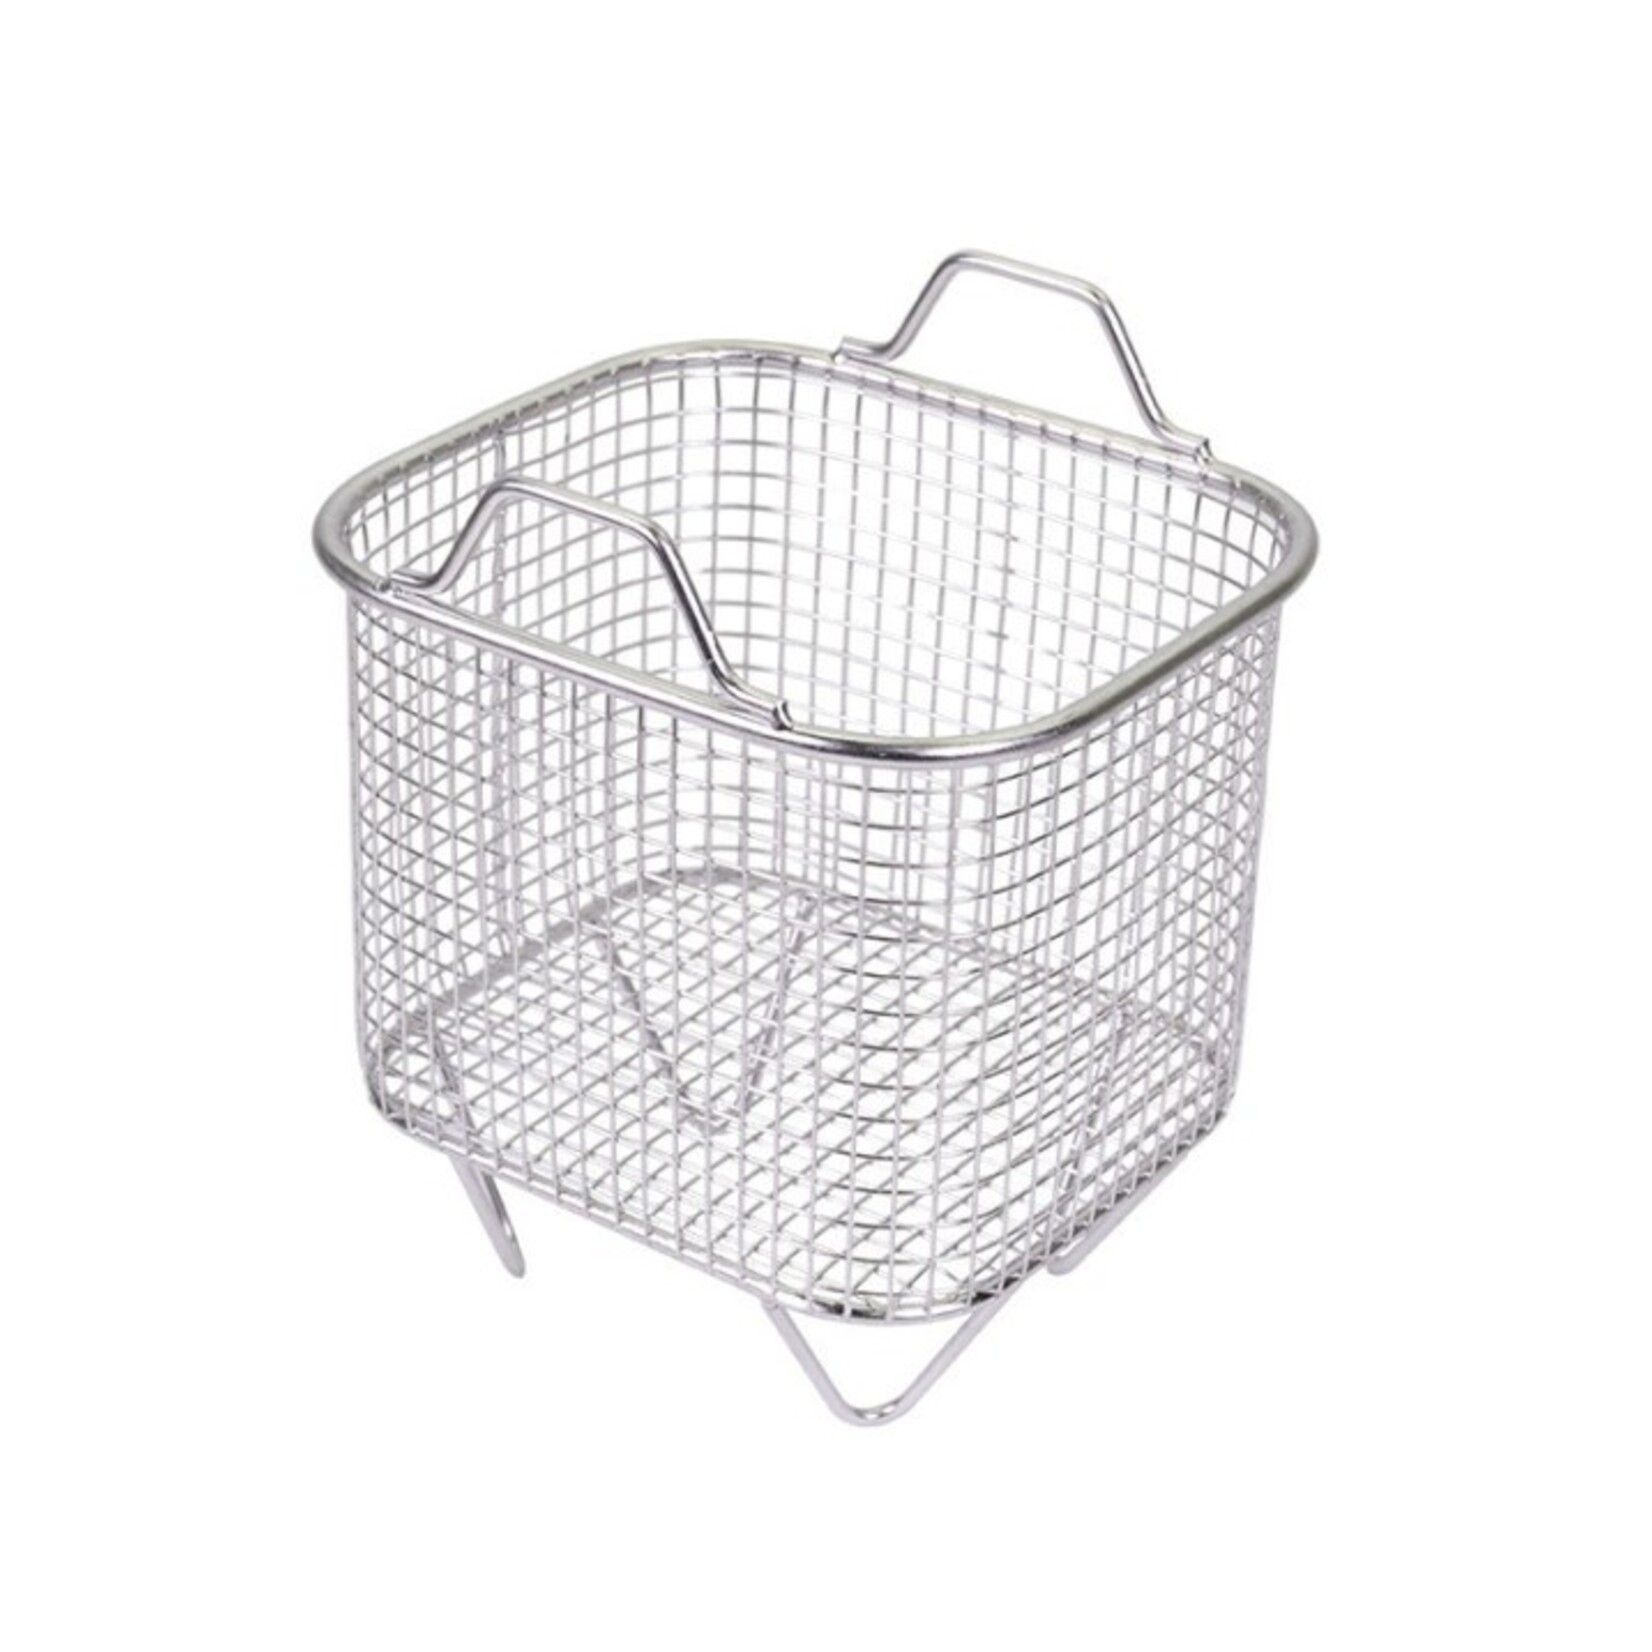 Prusa Research CW1 Metal basket